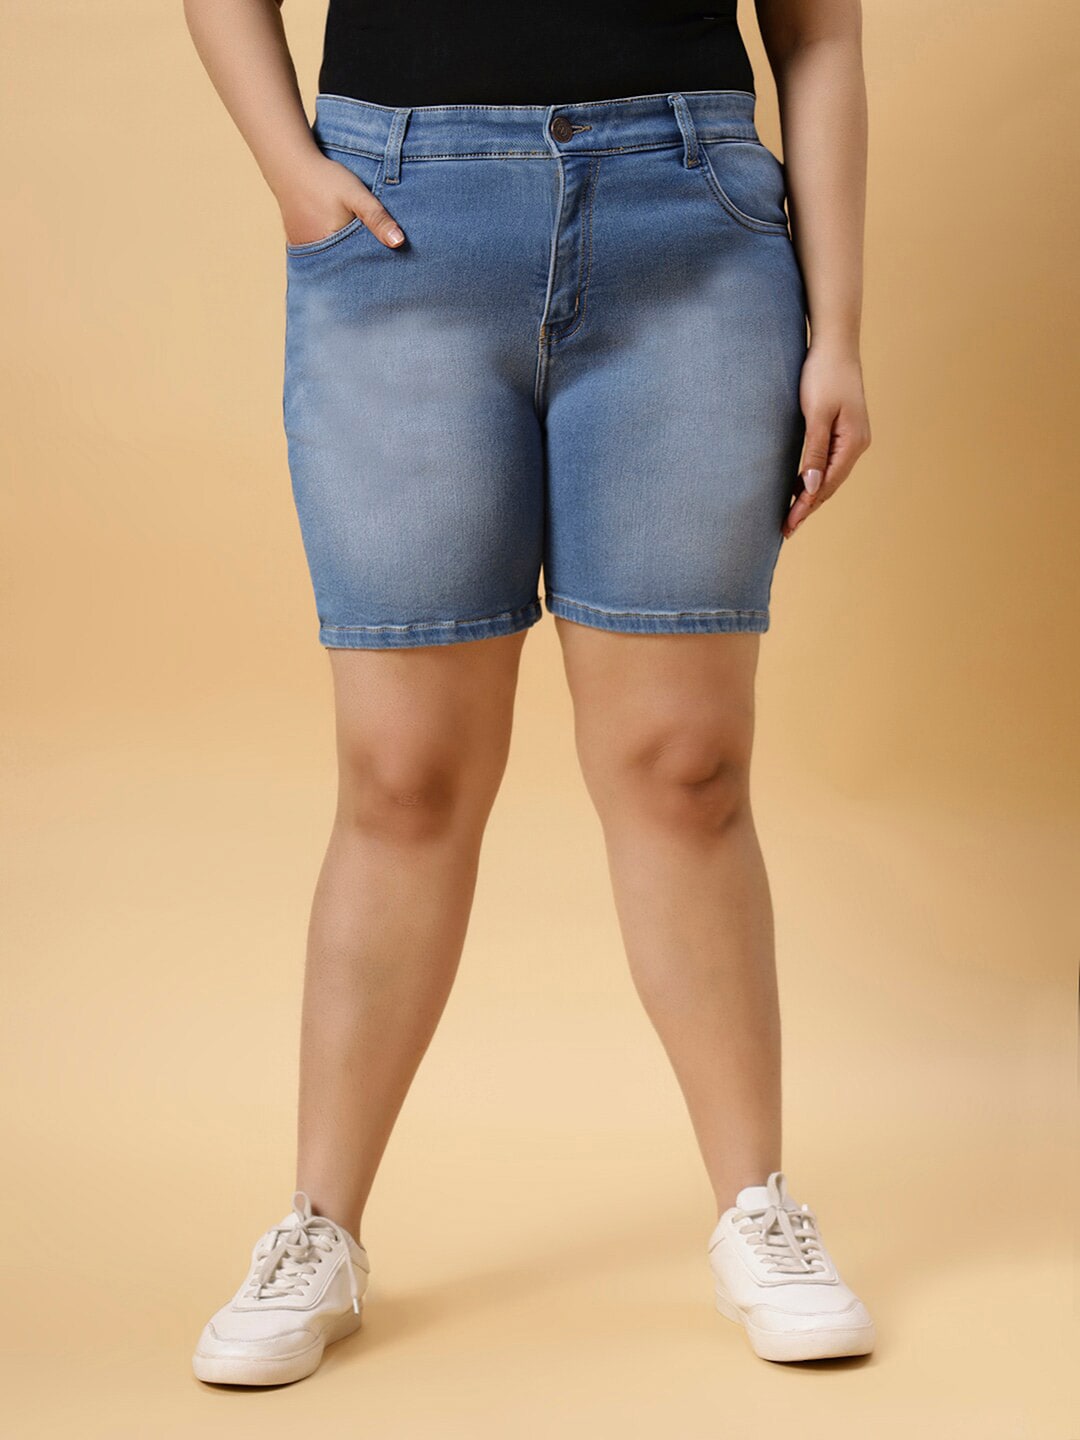 ZUSH Women Plus Size Washed Stretchable Cotton Denim Shorts Price in India